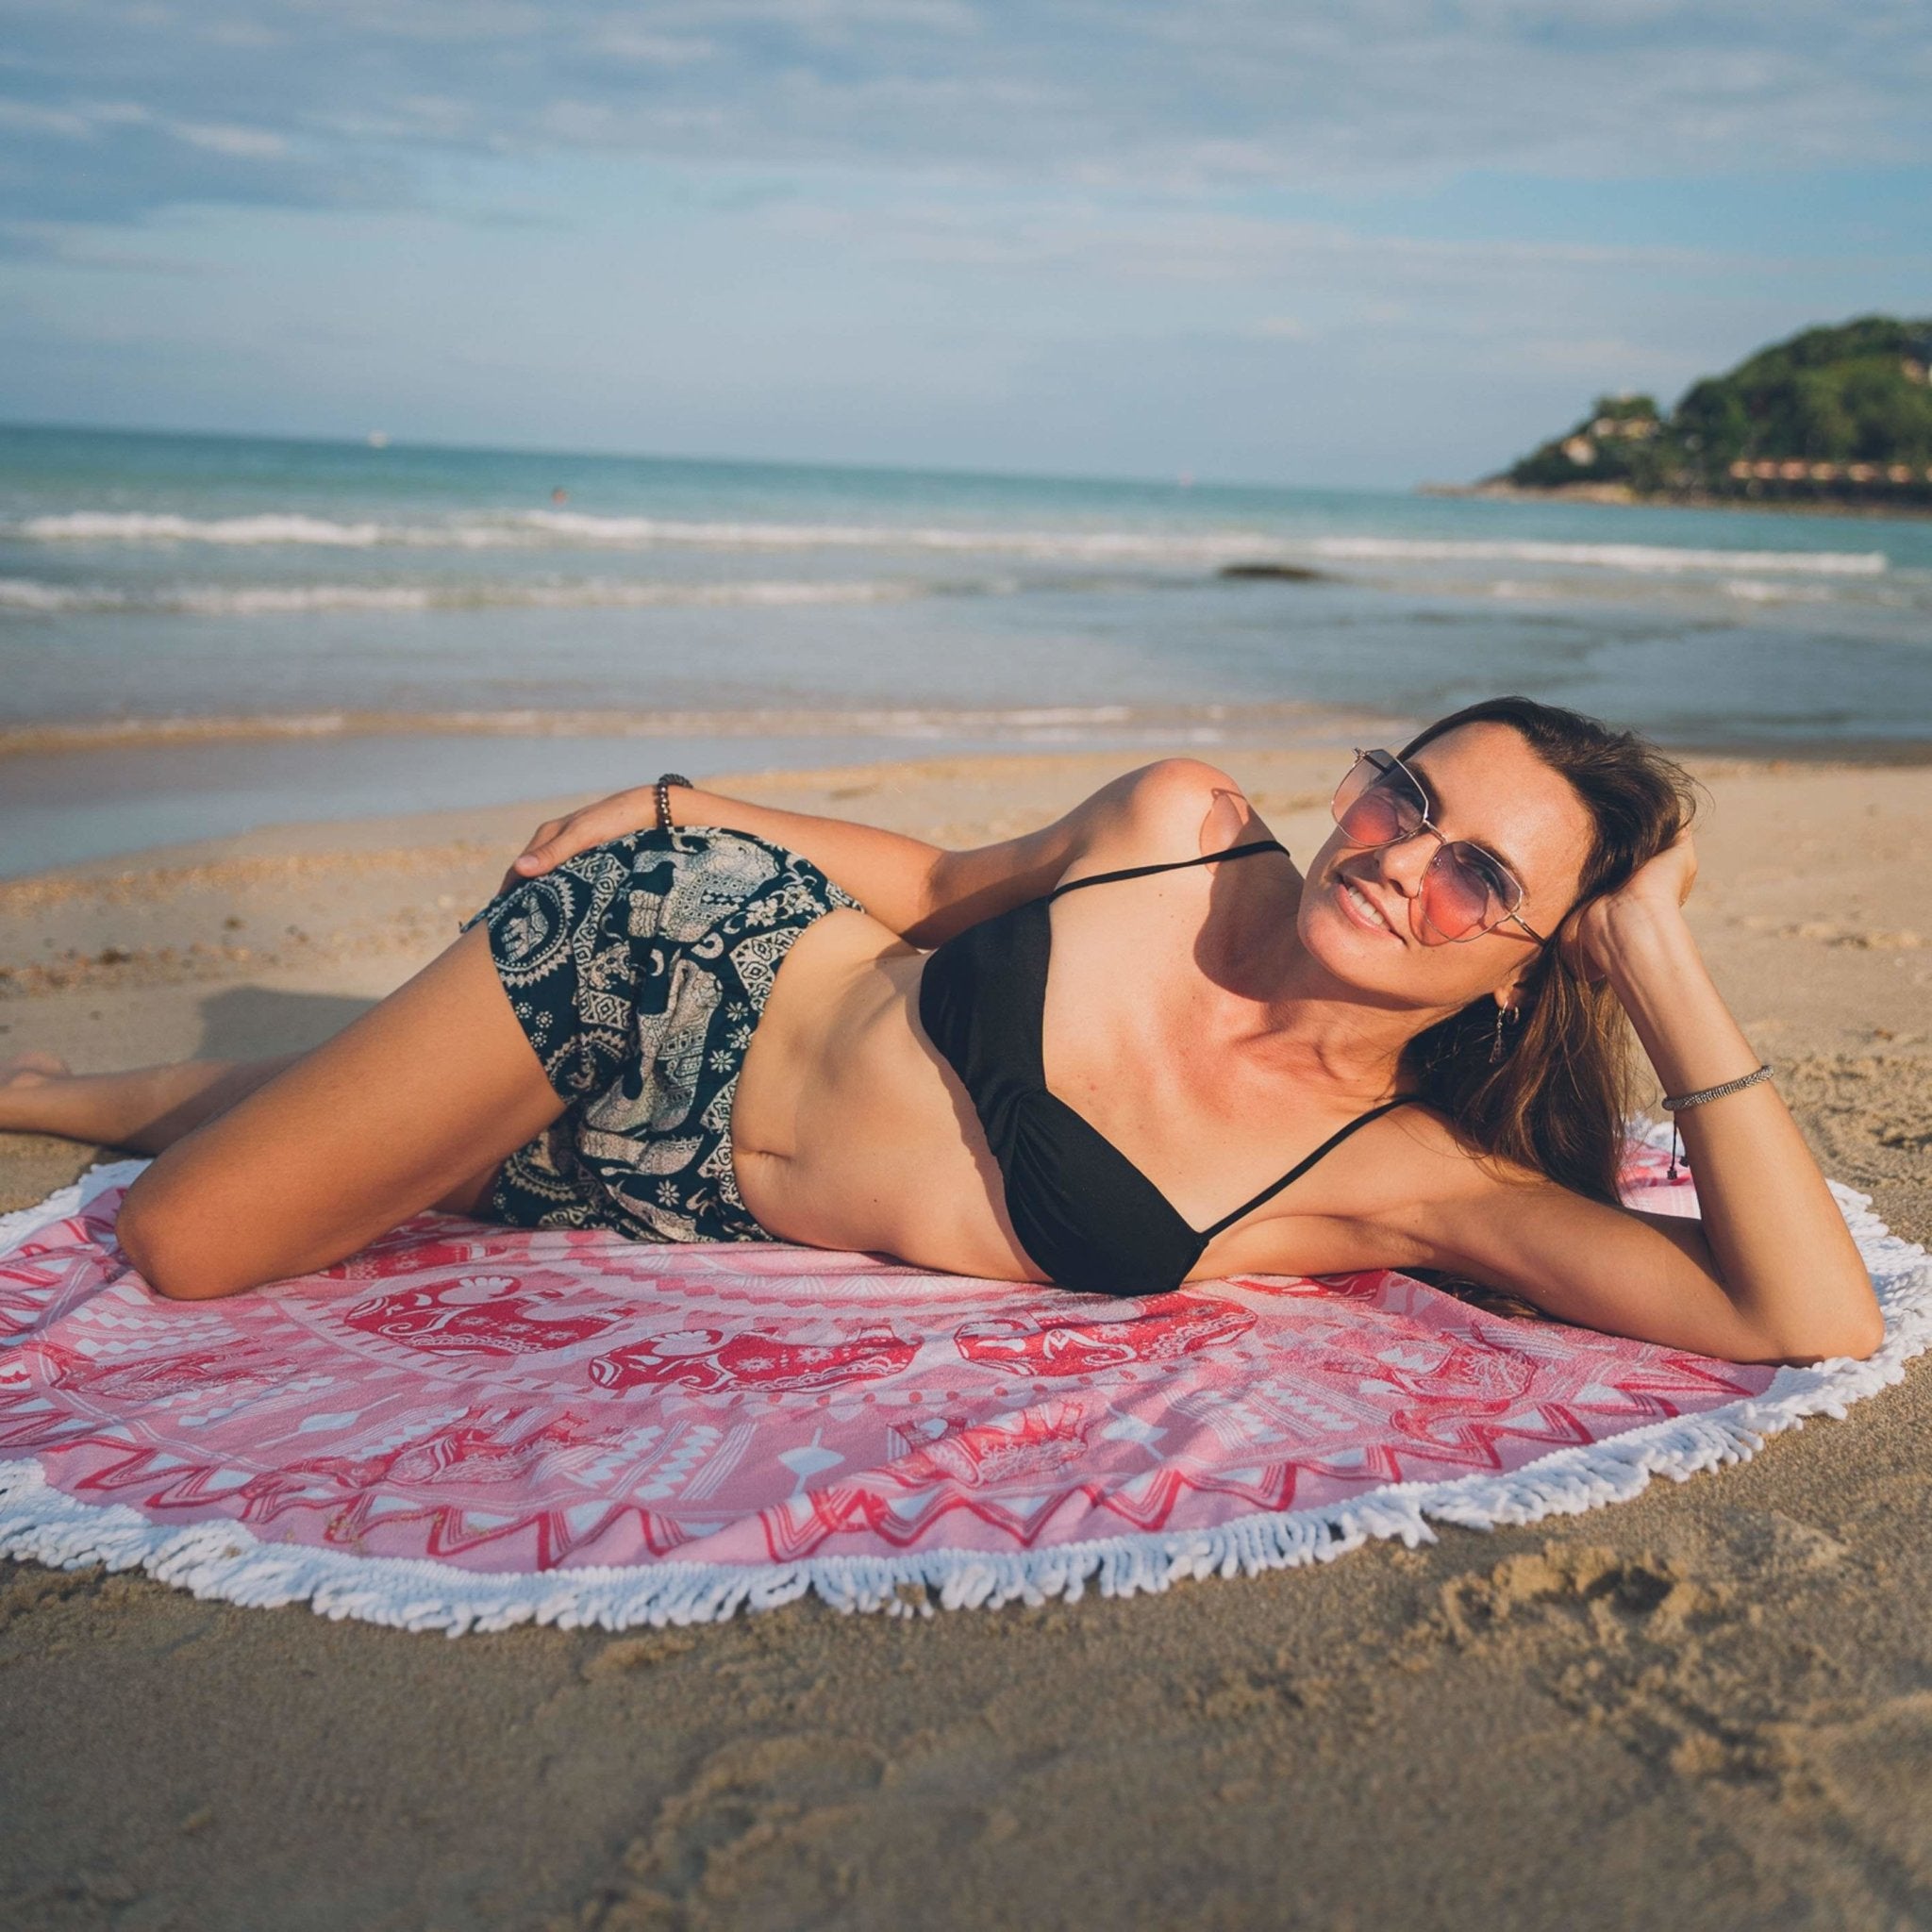 BALI BEACH TOWEL Elepanta Beach Towels - Buy Today Elephant Pants Jewelry And Bohemian Clothes Handmade In Thailand Help To Save The Elephants FairTrade And Vegan